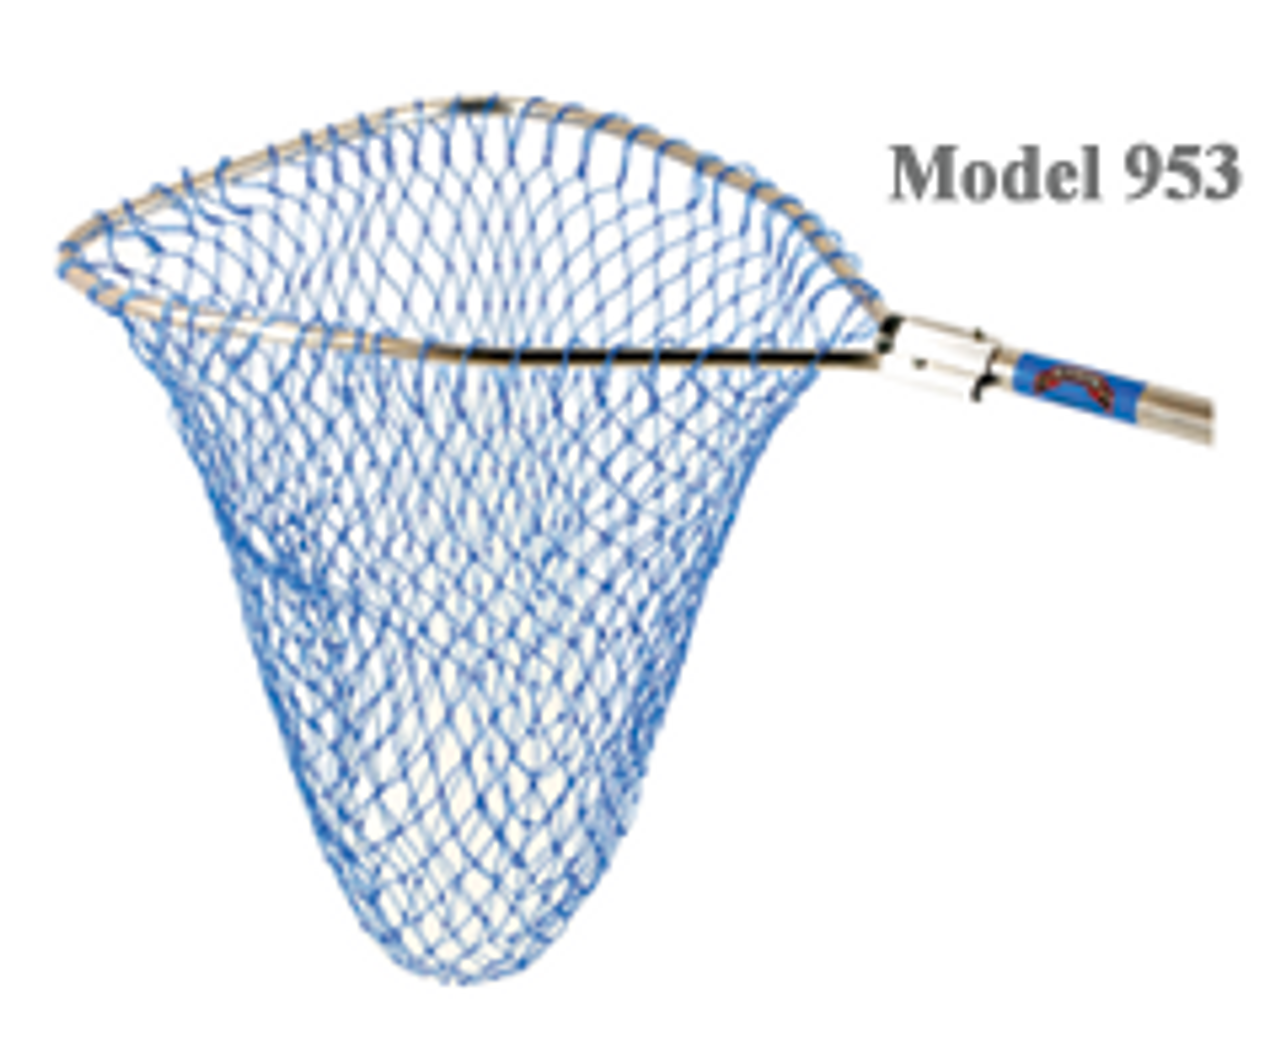 Ranger Nets Octagon Handle Big Game Nets - Hoop Size: 34 x 30